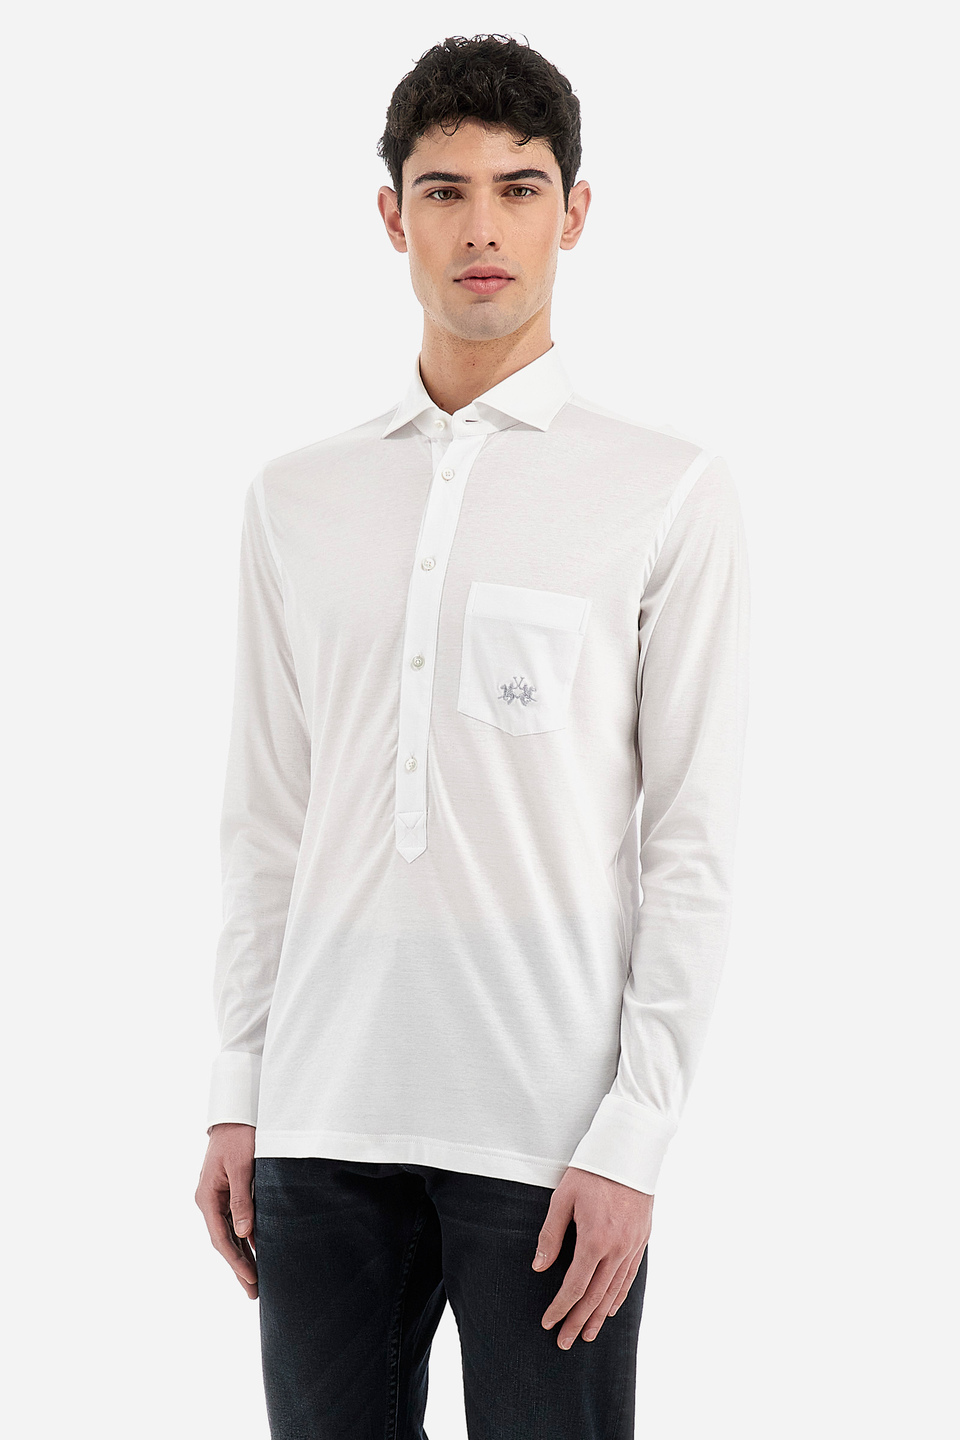 Men's custom fit long sleeve jersey cotton shirt - Varden | La Martina - Official Online Shop